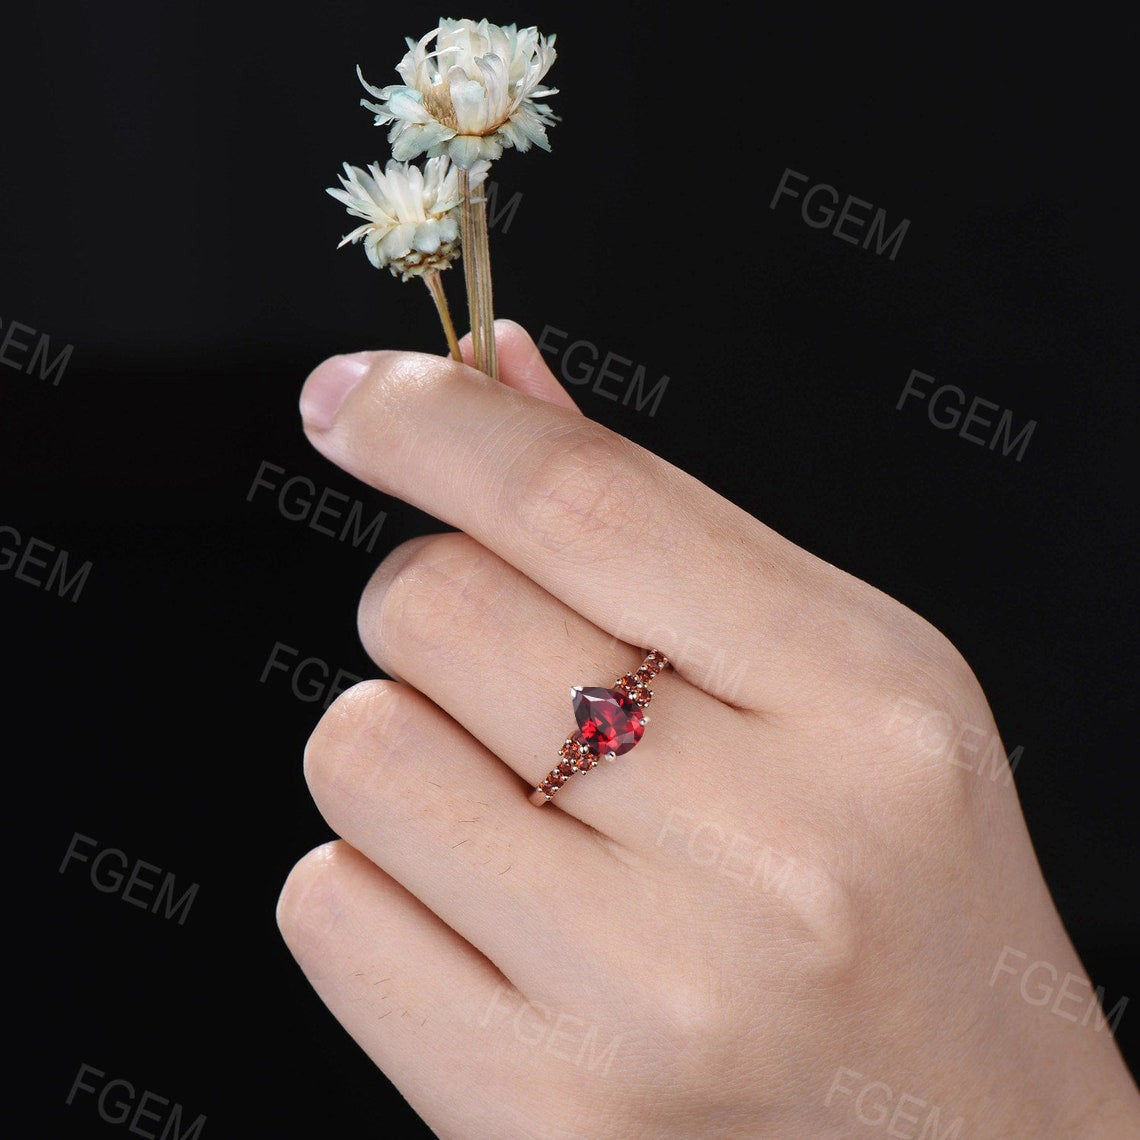 1.25ct Pear Shaped Half Eternity Ruby Engagement Ring July Birthstone Wedding Ring Red Ruby Gemstone Jewelry Birthday/Anniversary Ring Women